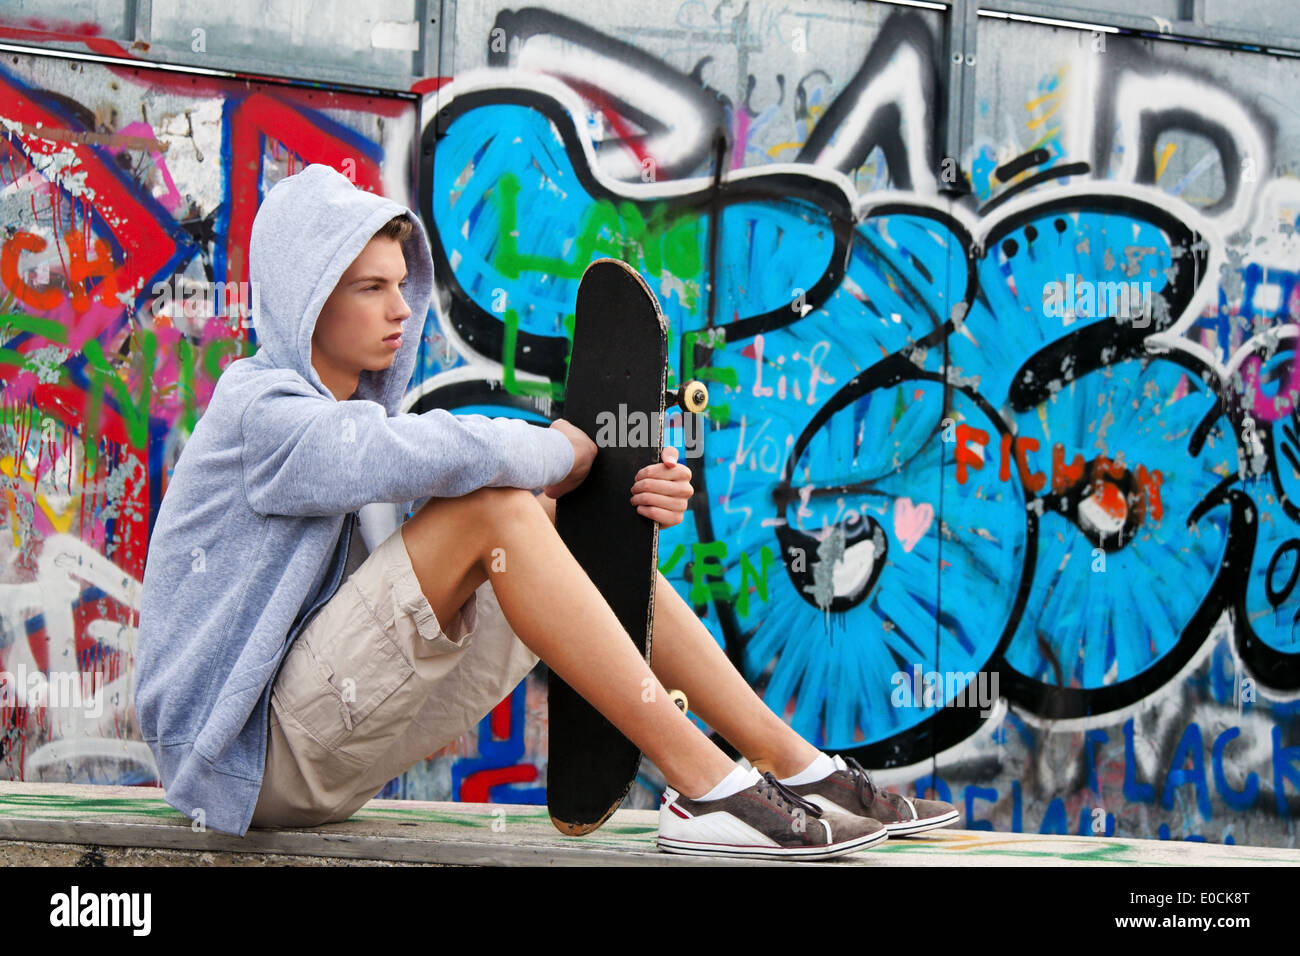 A cool looking youthful man infront of graffiti, Ein cool blickender Jugendlicher Mann vor Graffiti Stock Photo